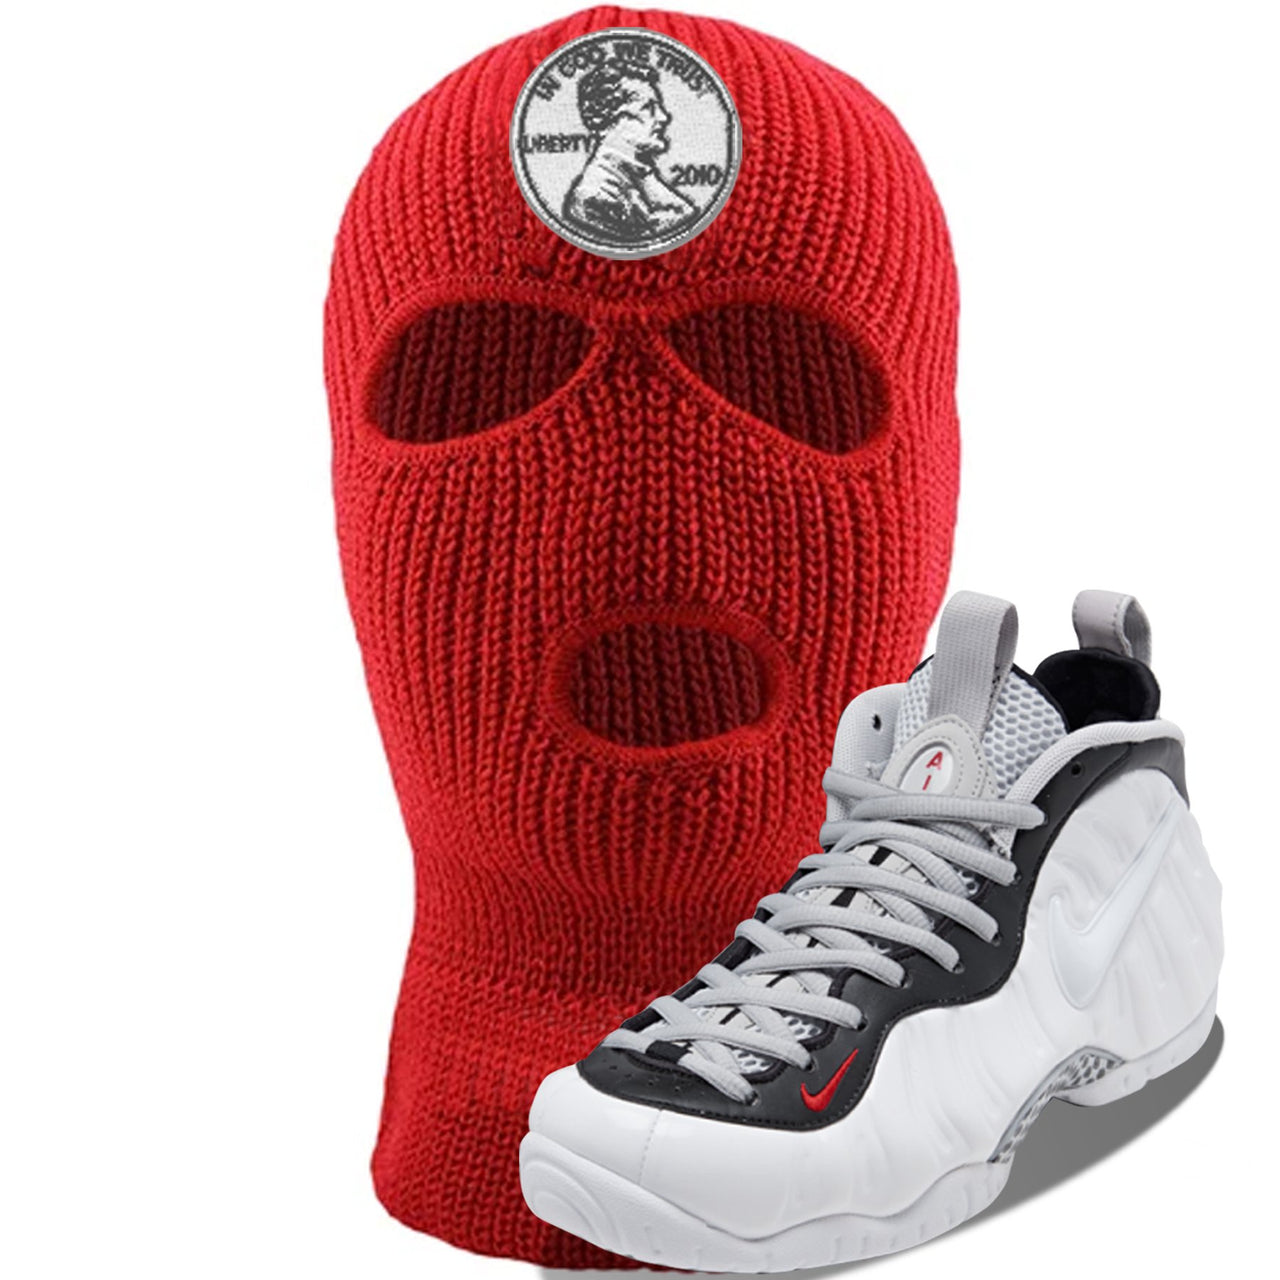 Foamposite Pro White Black University Red Sneaker Red Ski Mask | Winter Mask to match Nike Air Foamposite Pro White Black University Red Shoes | Penny